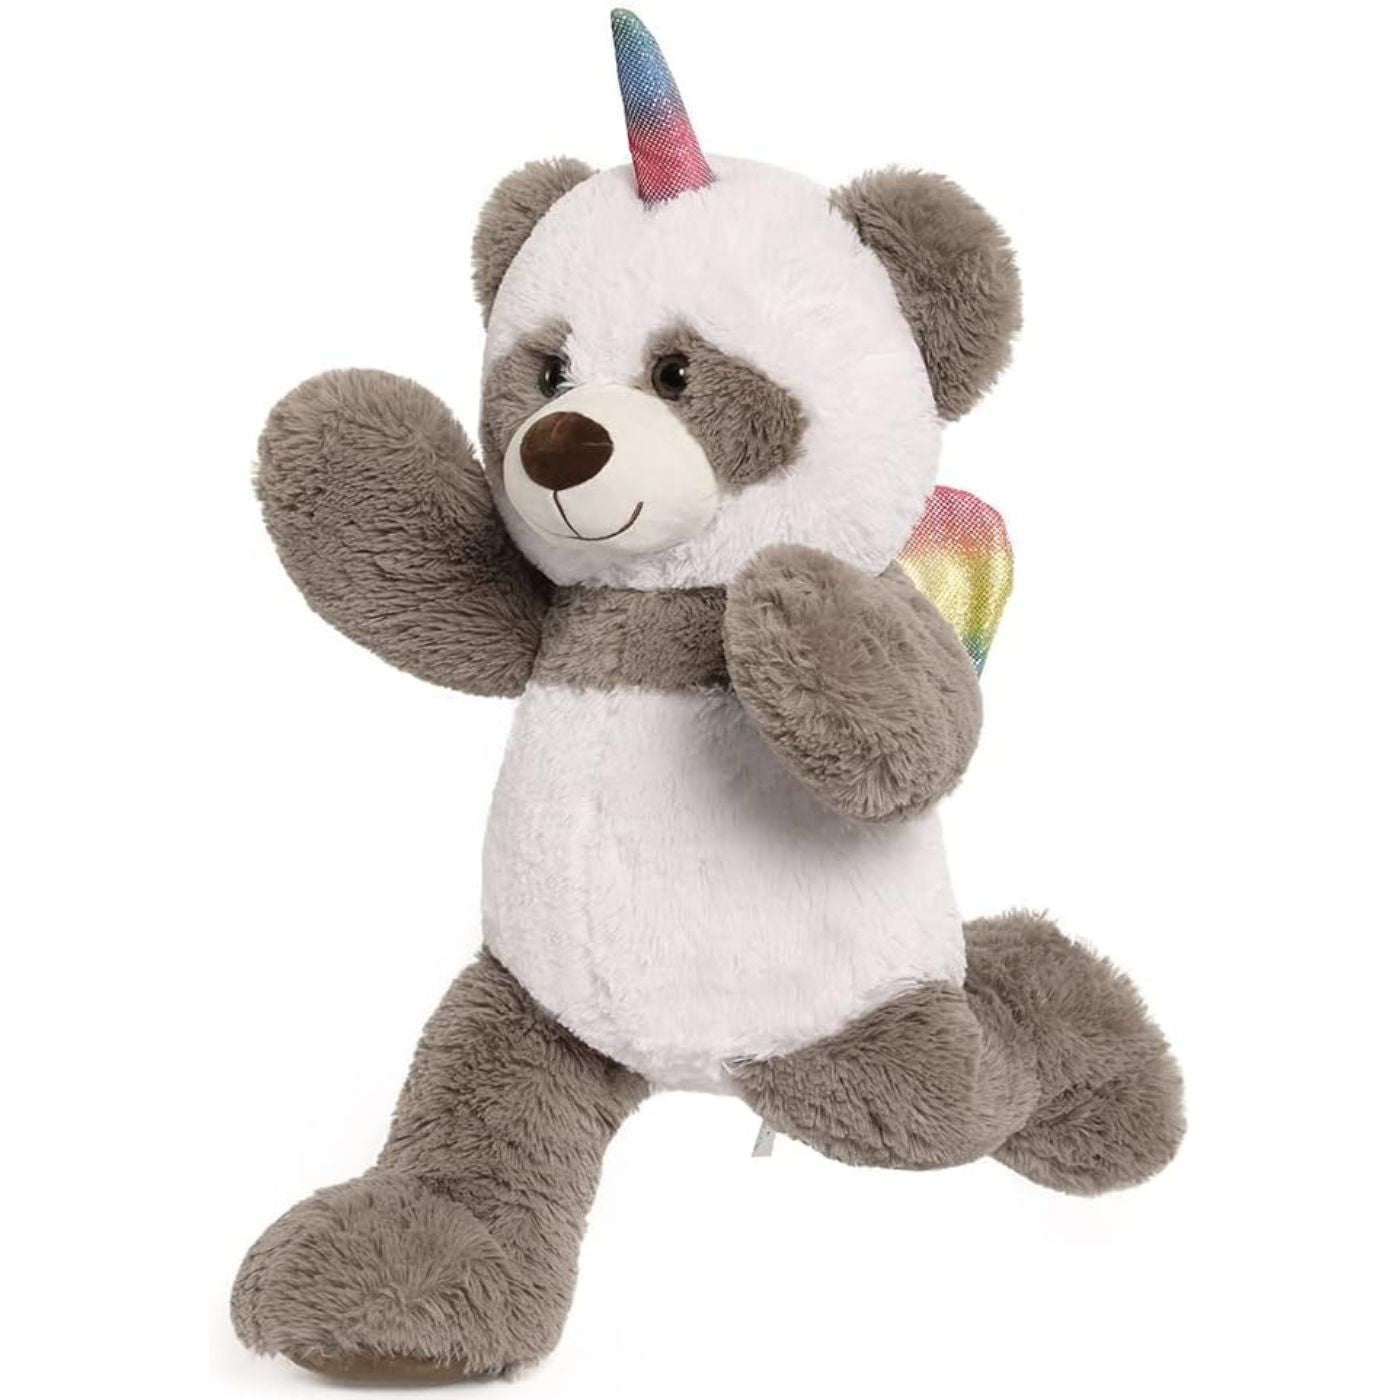 Cute Panda Stuffed Animal Toy, 18 Inches